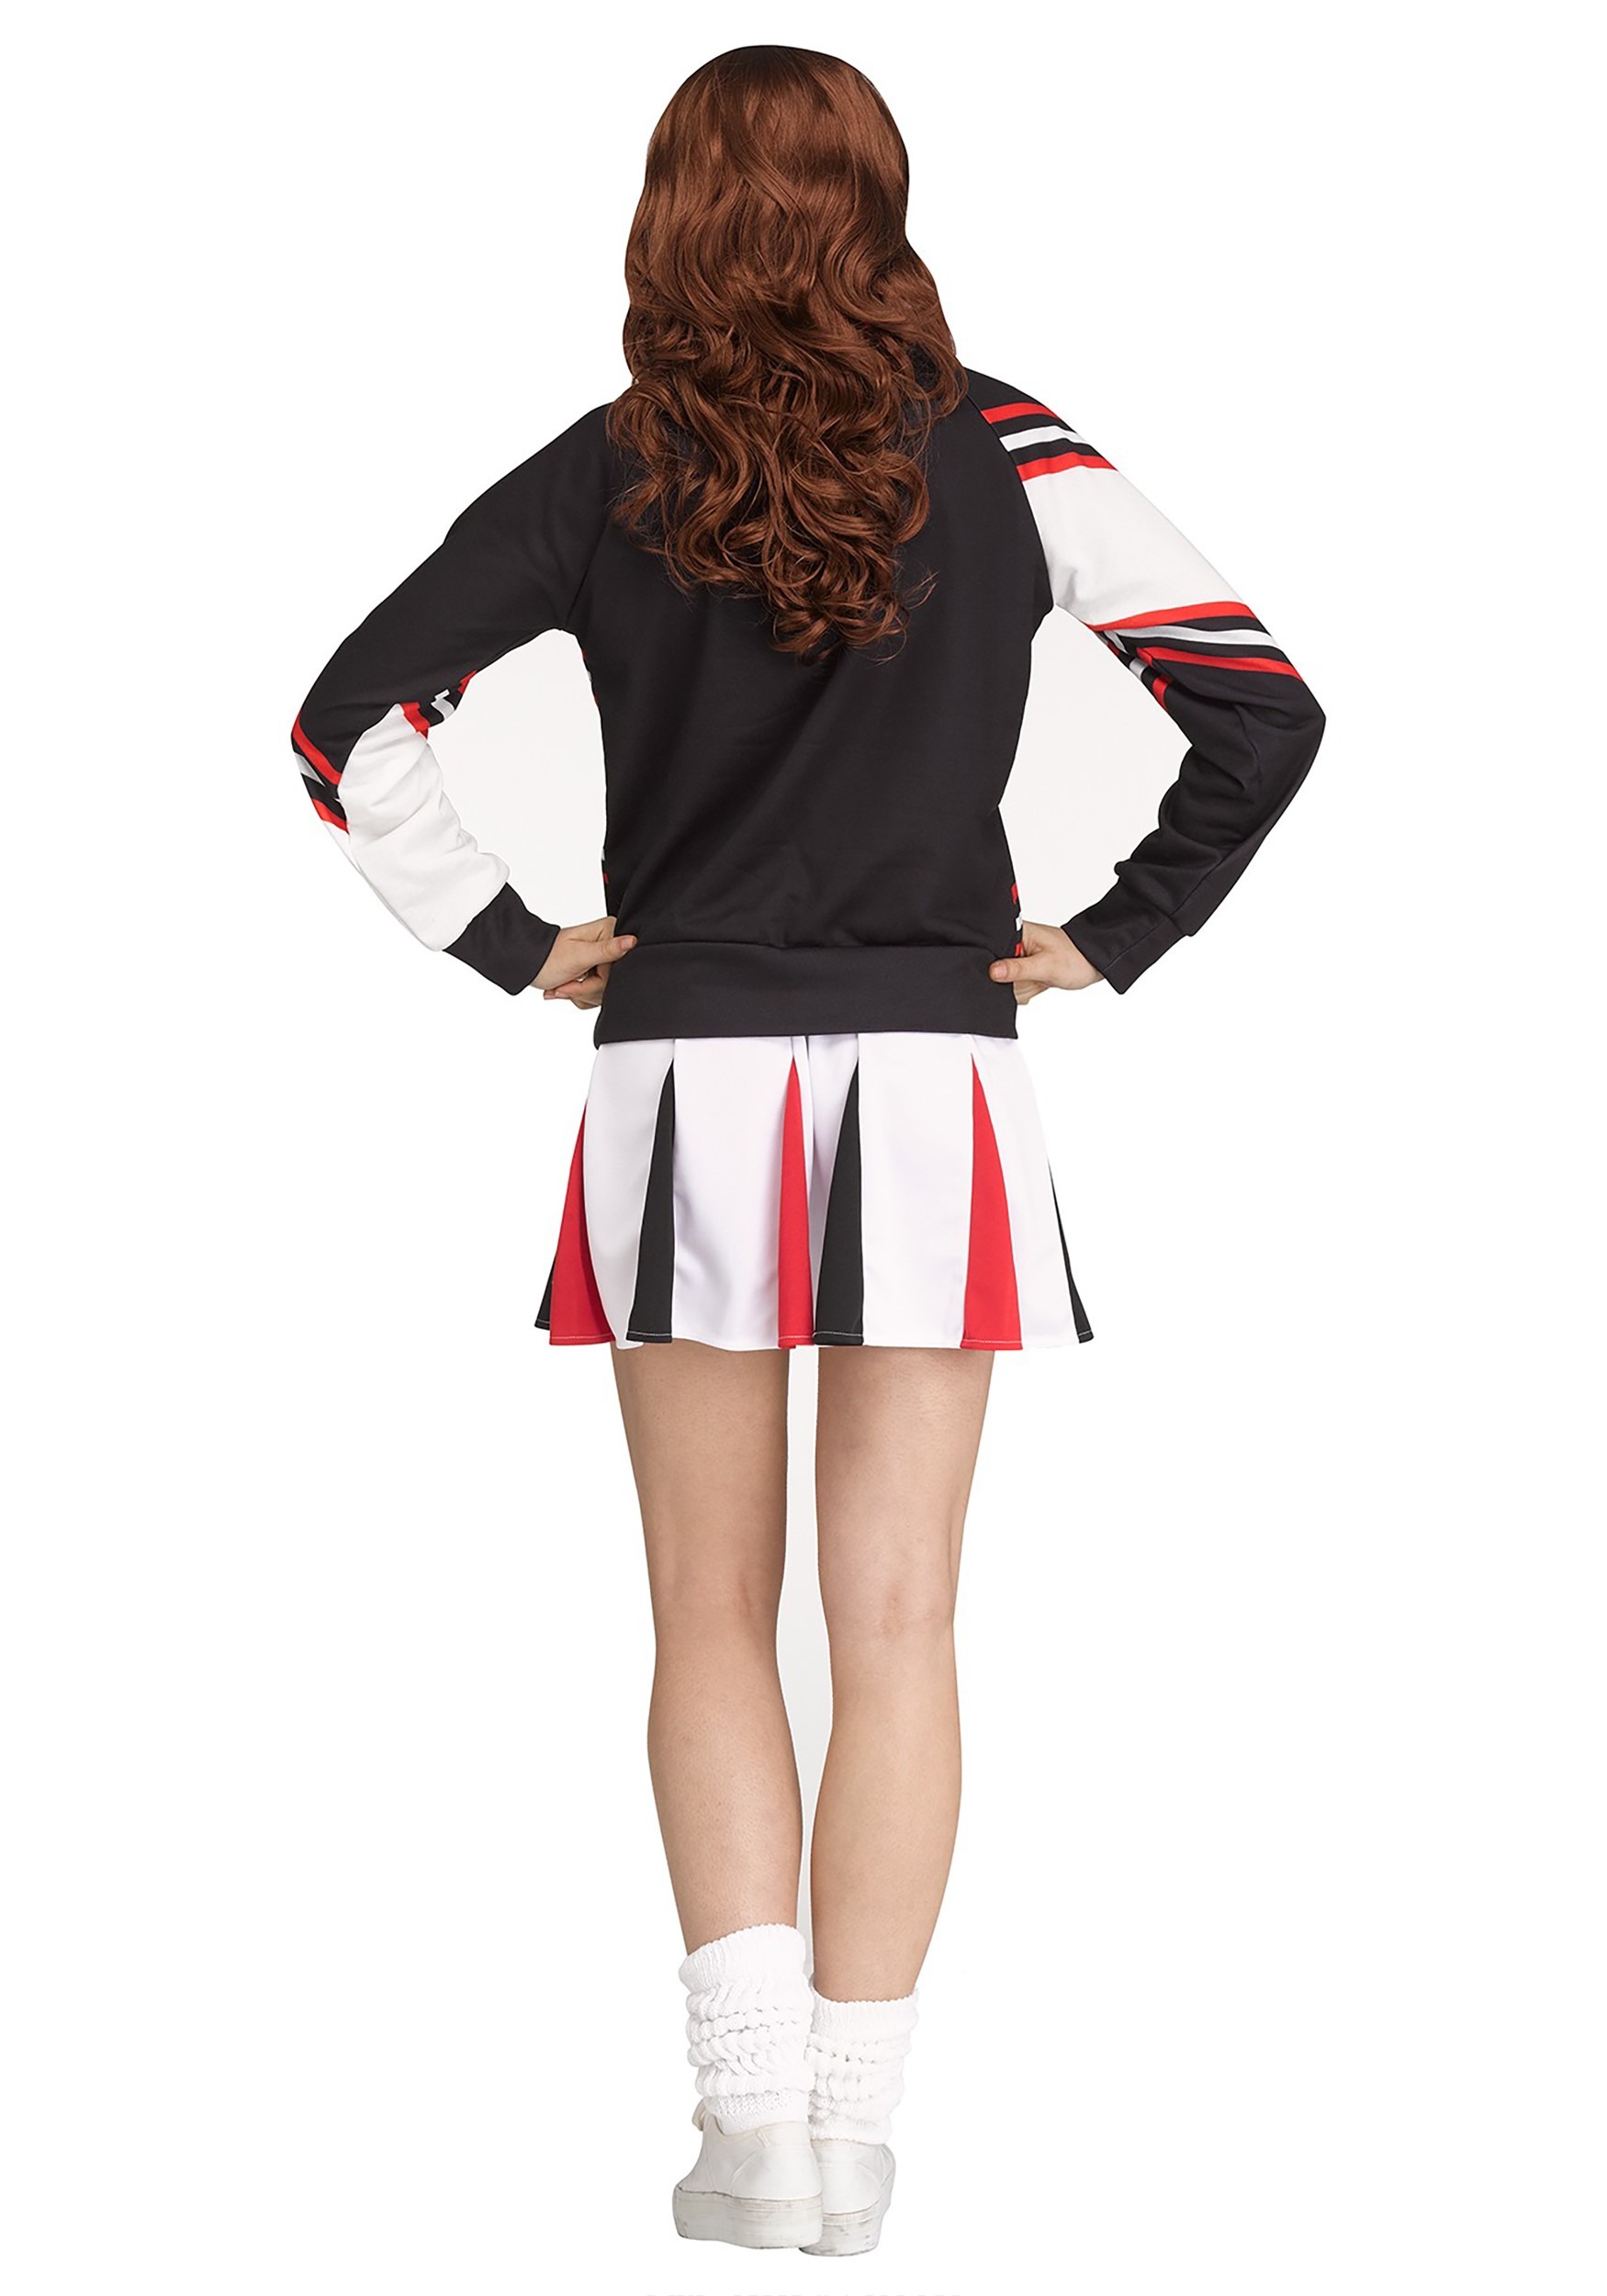 Fancy Dress High School Fun Girl Fun Stag Night Adult Cheerleader Man Costume